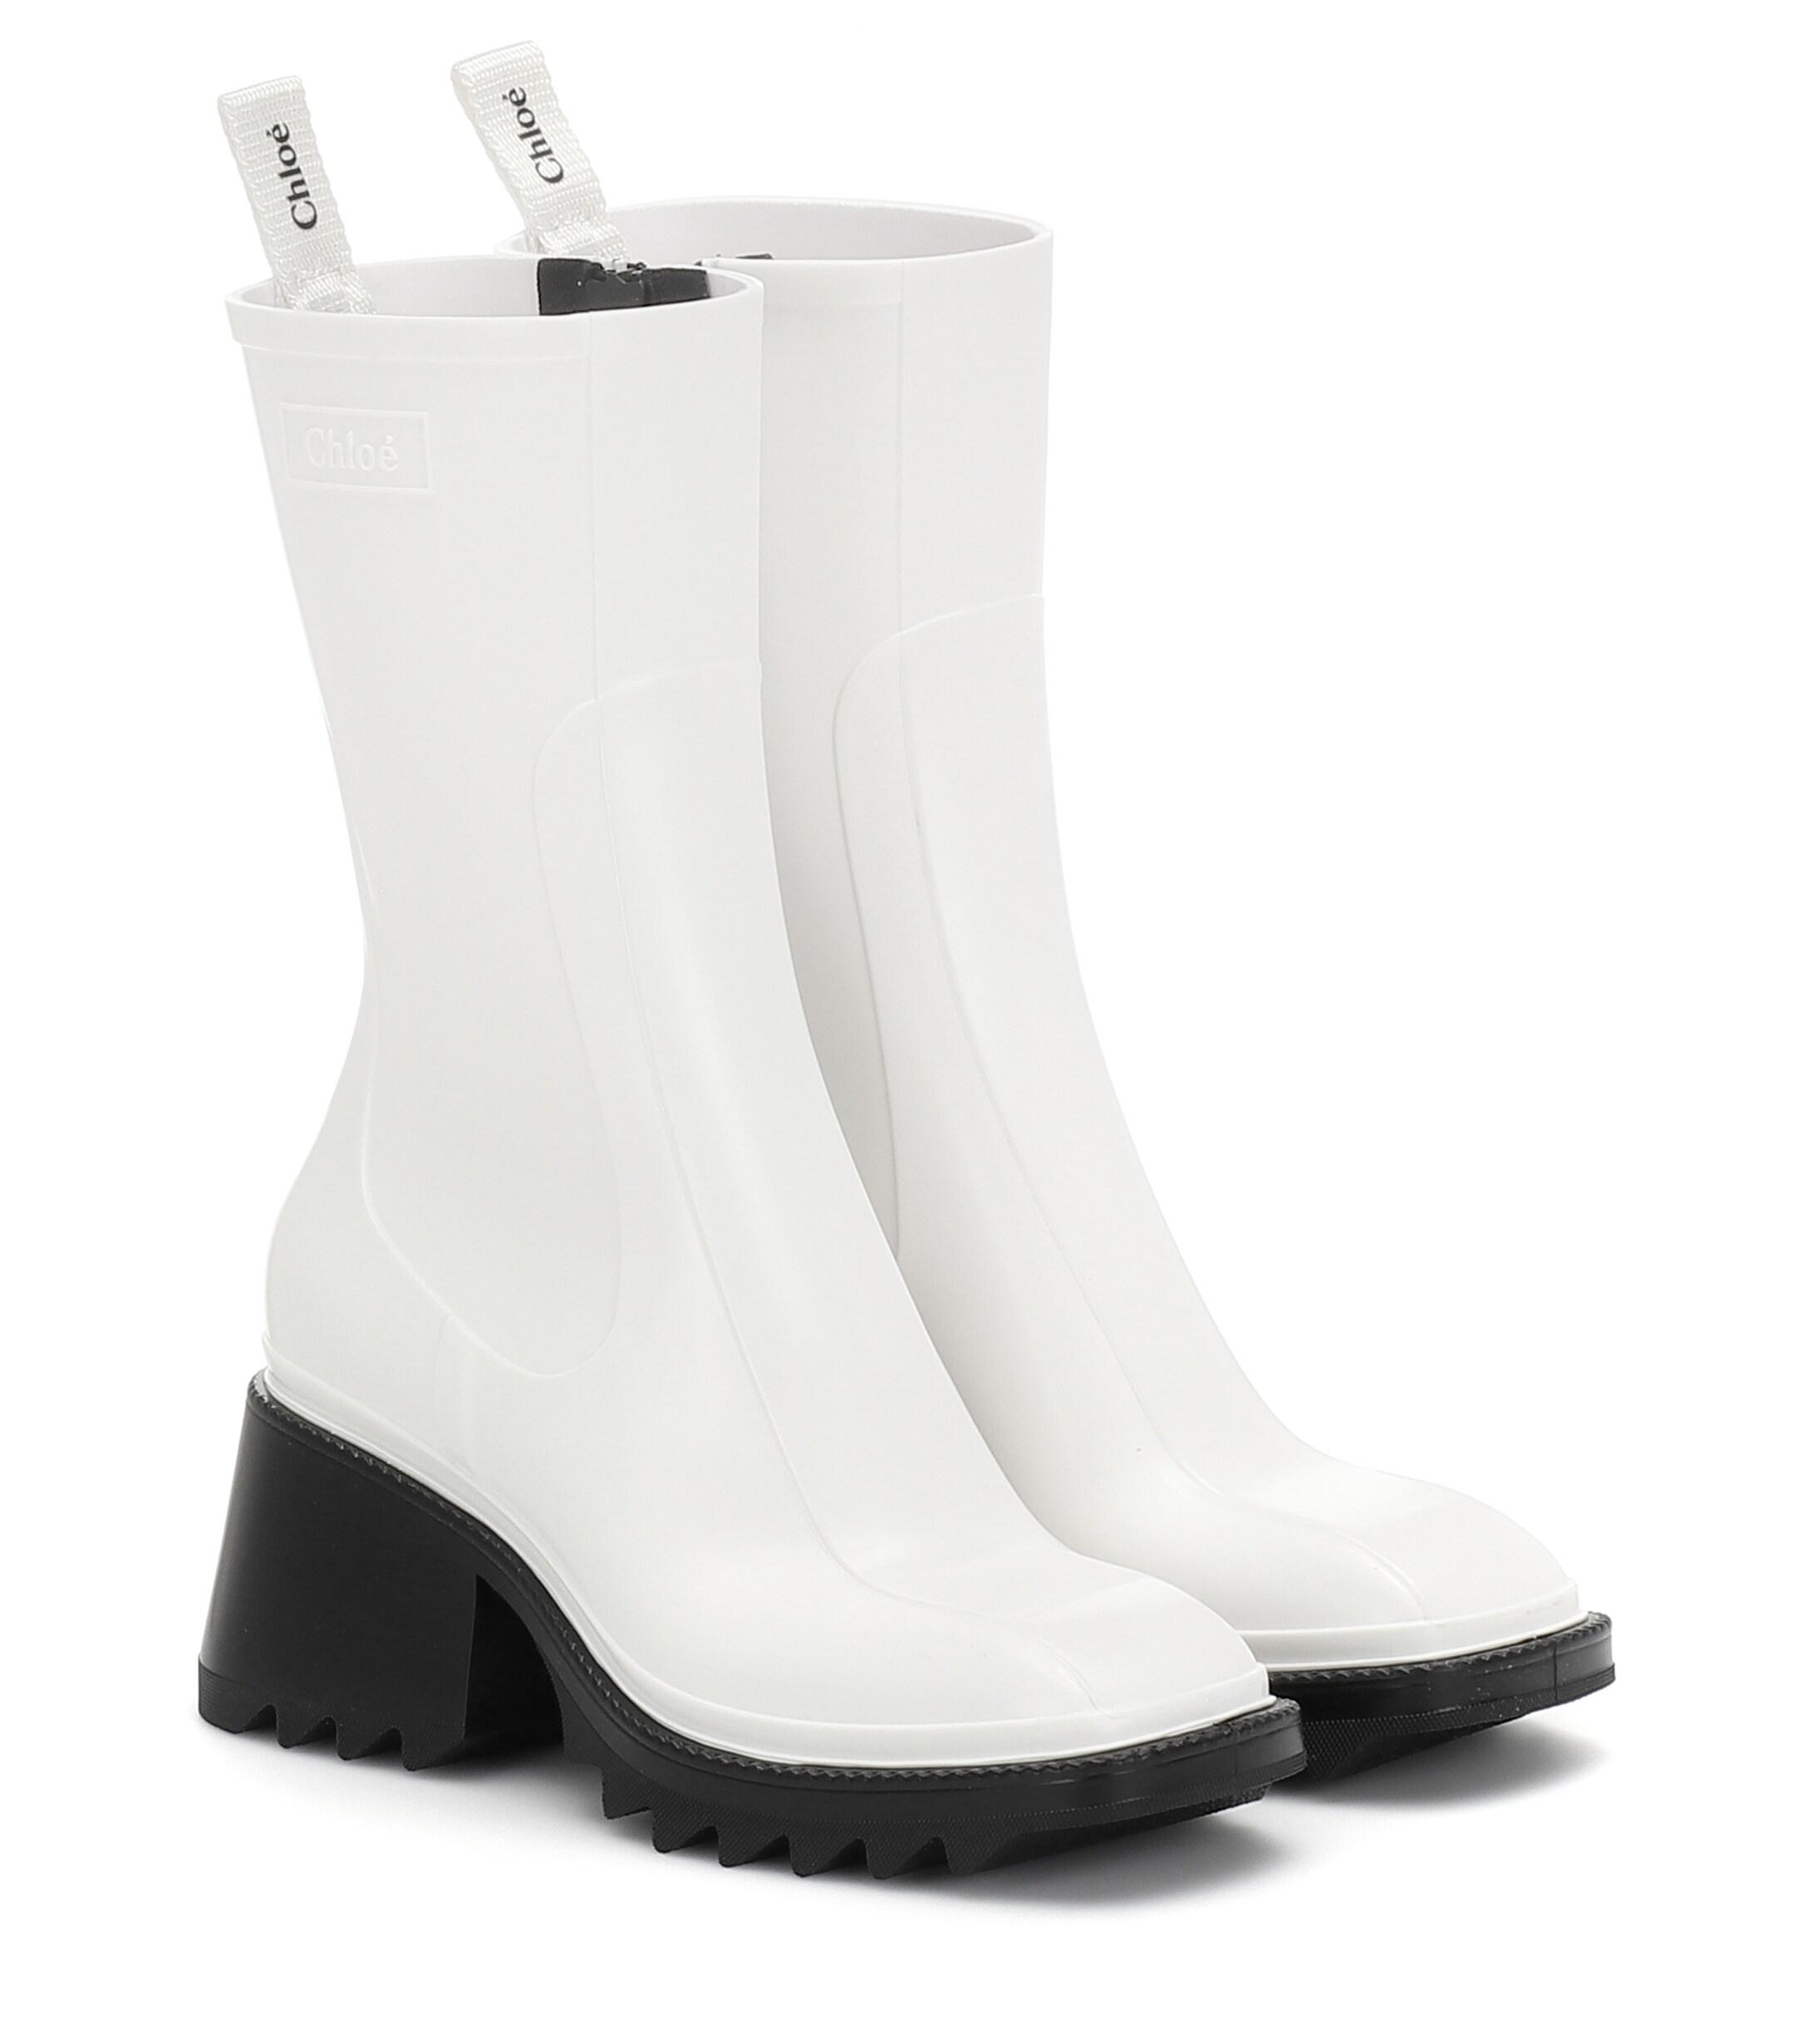 Chloé Rubber Rain Boots Betty 50 in White - Lyst